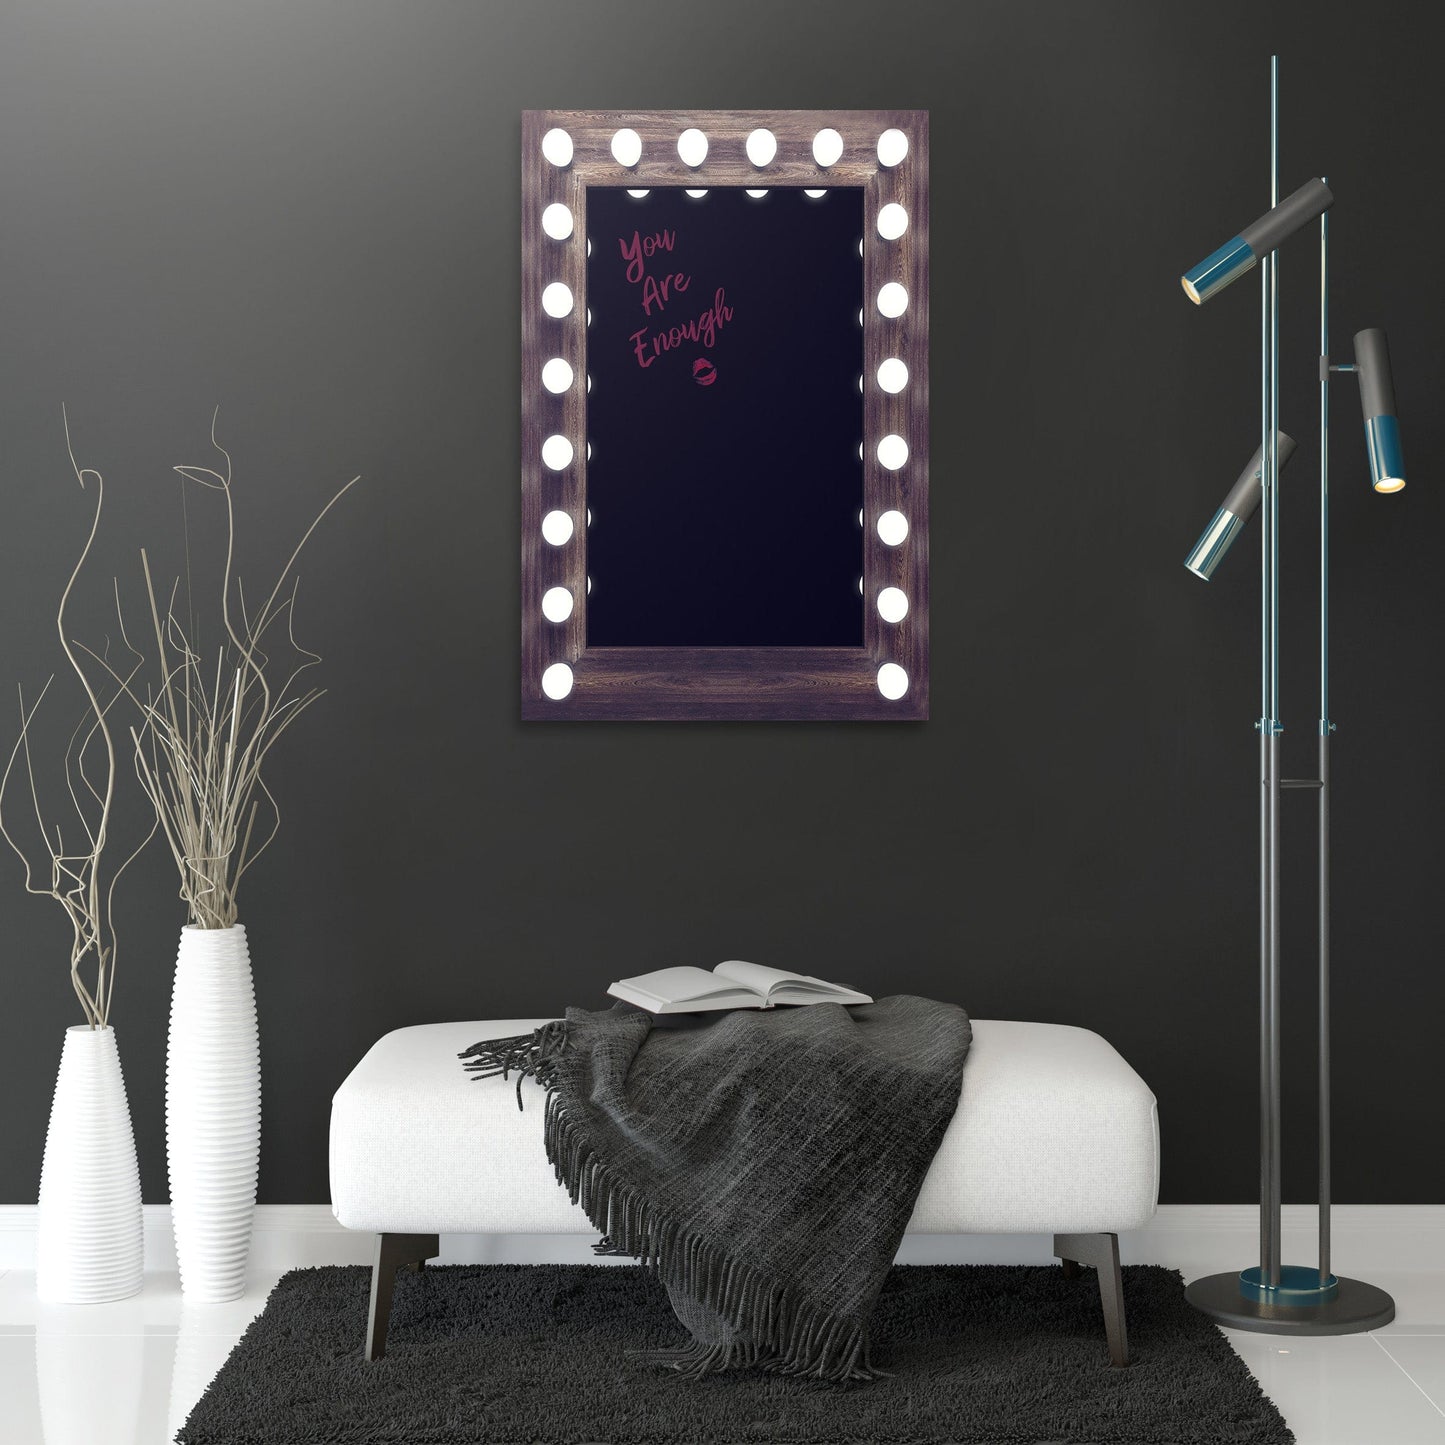 Mirror Quote - You Are Enough Wall Art | Inspirational Wall Art Motivational Wall Art Quotes Office Art | ImpaktMaker Exclusive Canvas Art Portrait